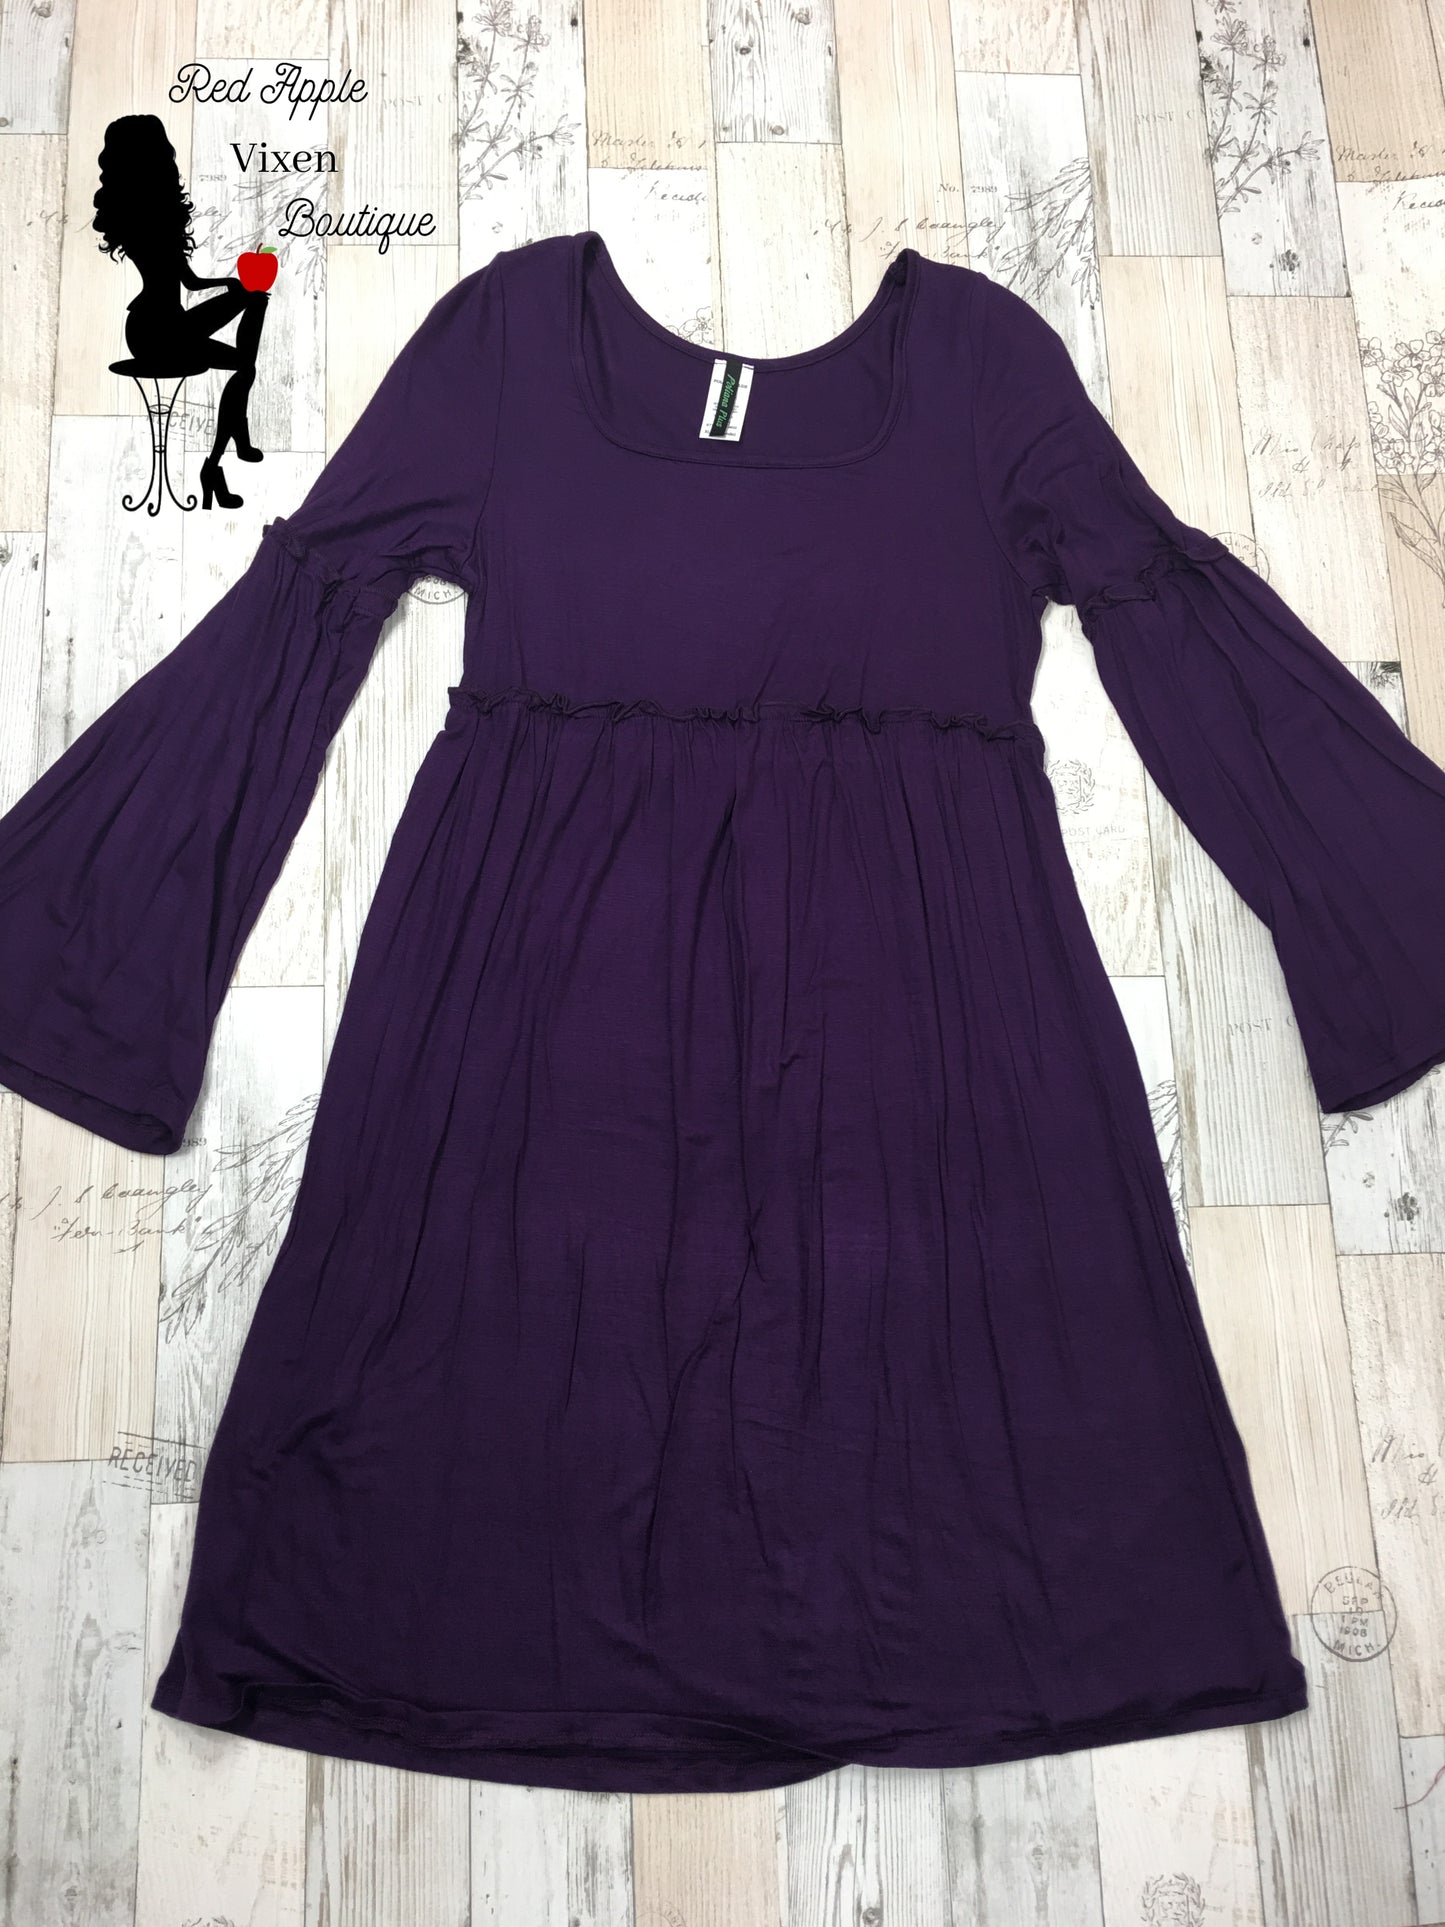 Solid Purple Bell Sleeve Dress - Red Apple Vixen Boutique